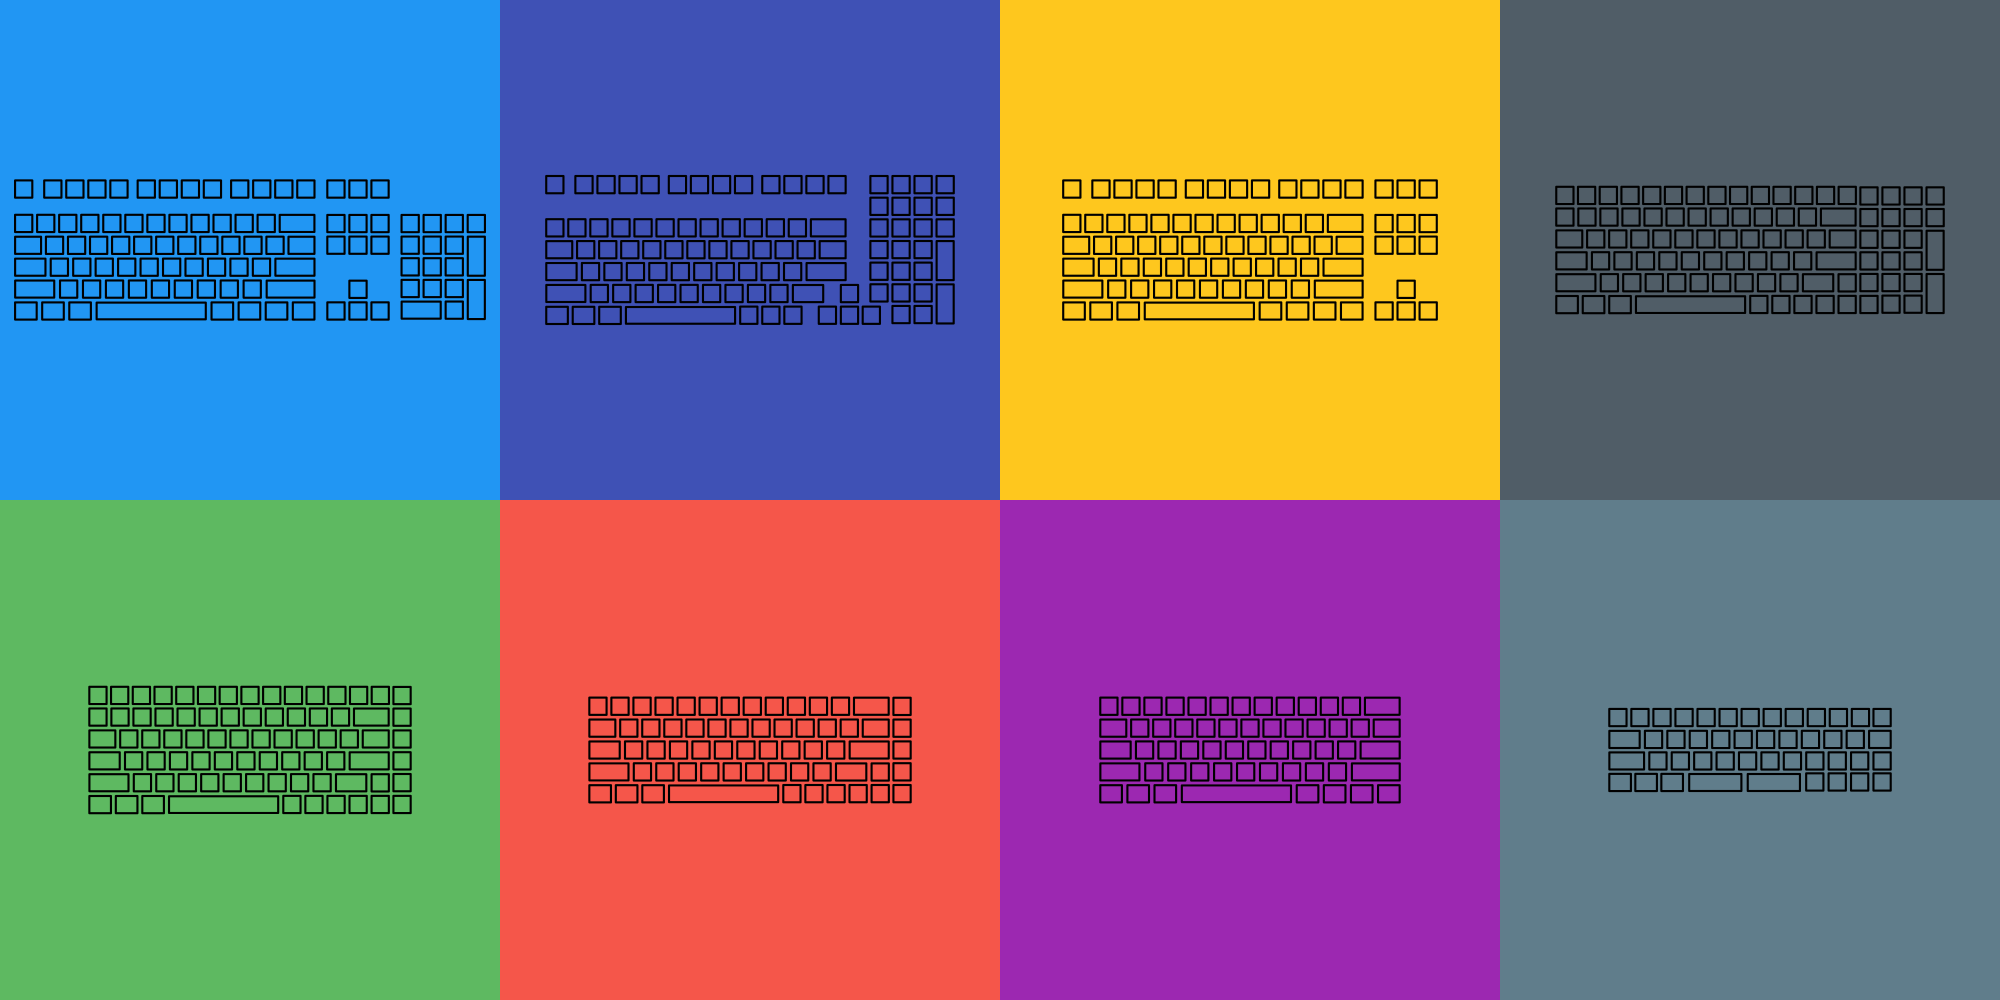 Interesante cultura puramente Guía de tamaños de teclados – Teclados Mecánicos MX